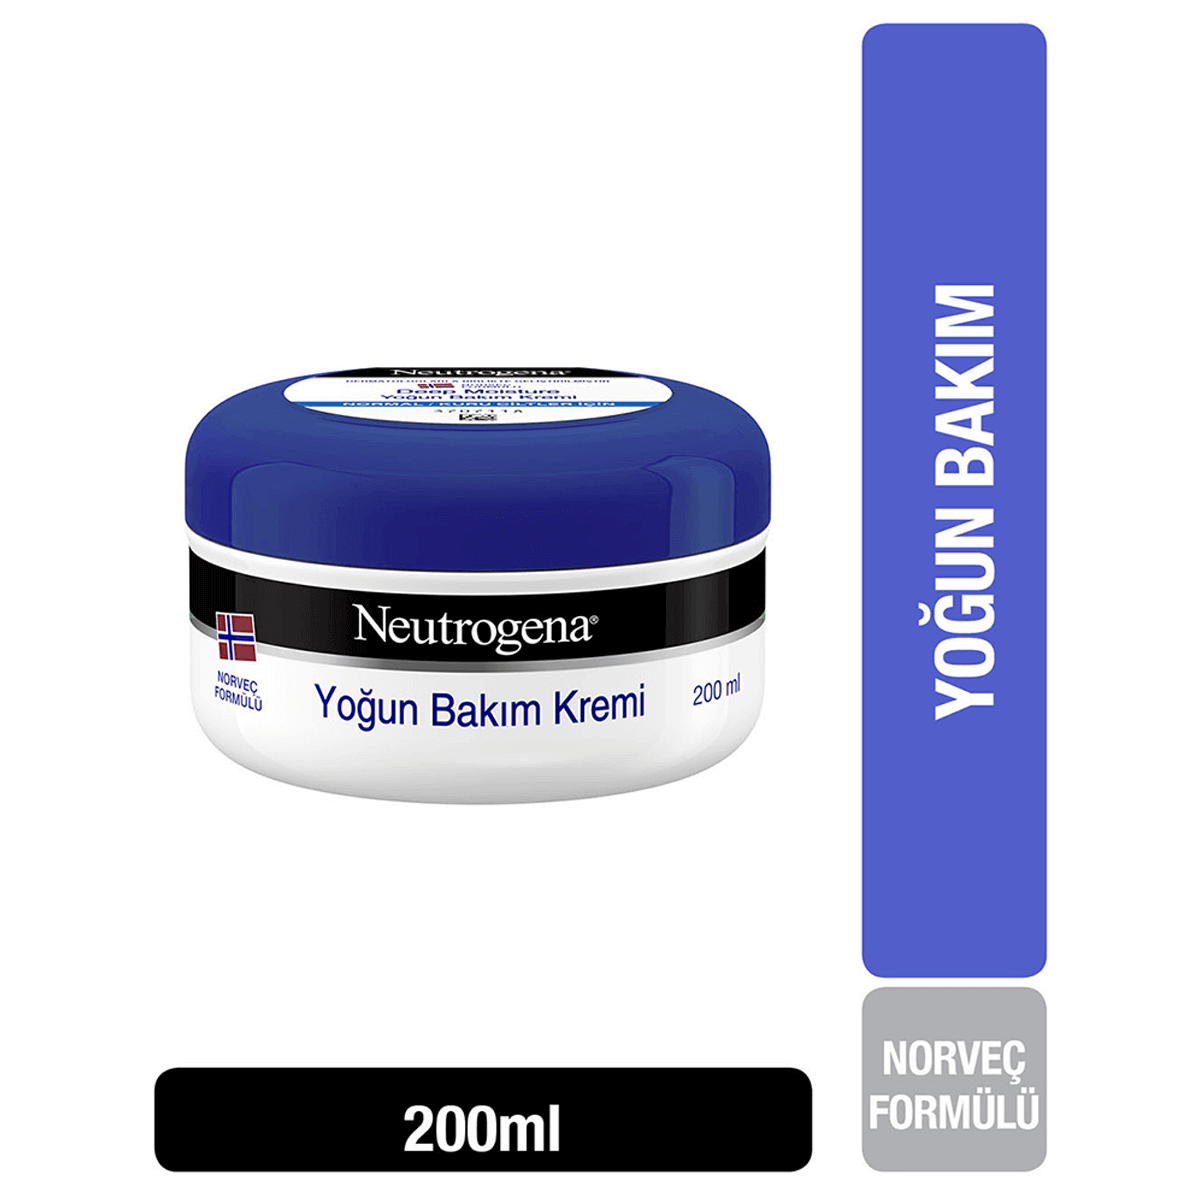 Neutrogena Norveç Formülü Rahatlatıcı Yoğun Bakım Kremi 200 ml